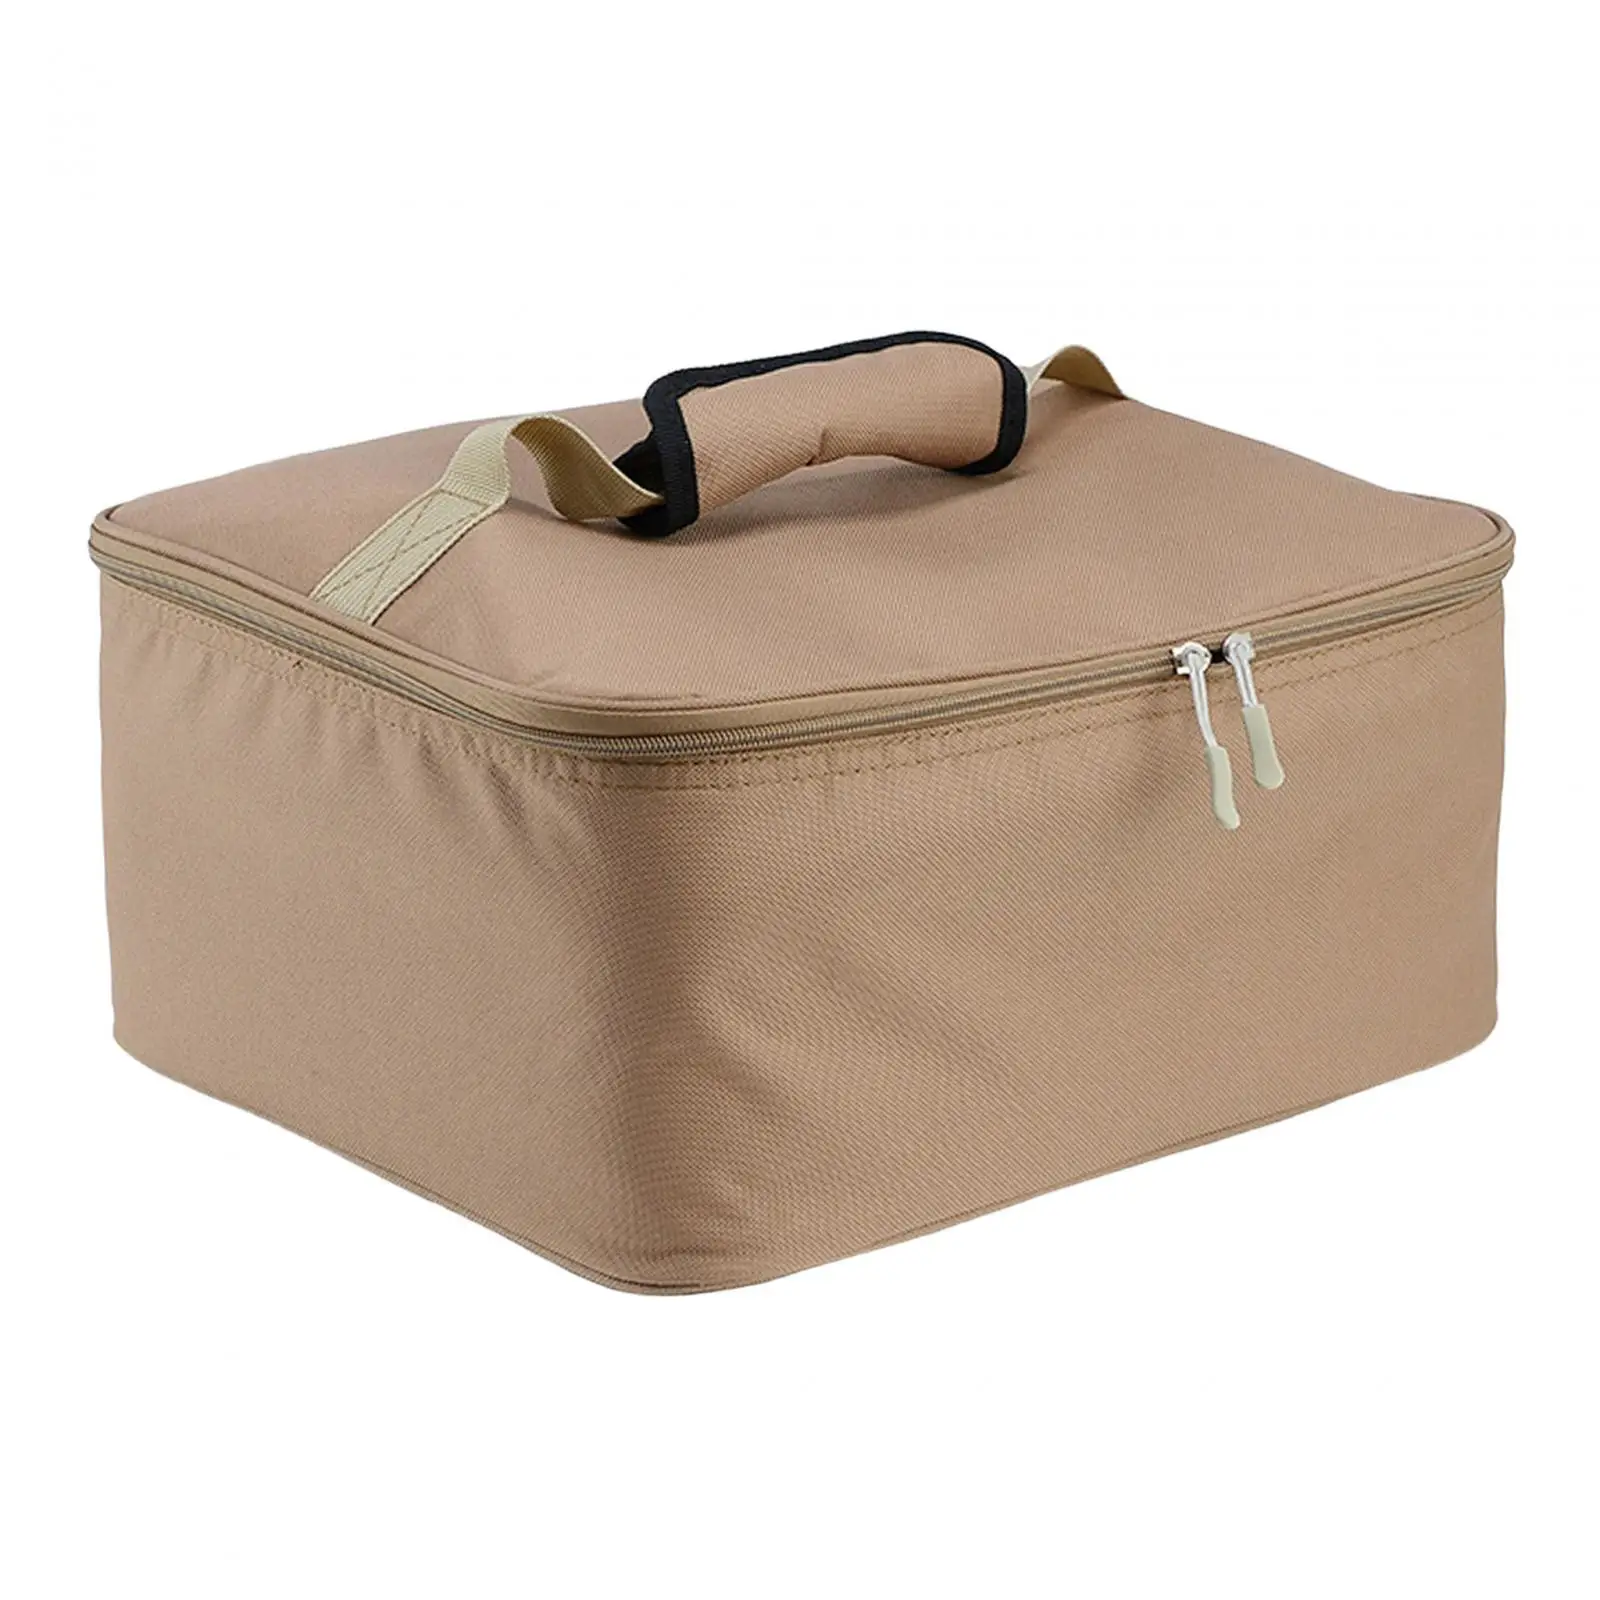 Gas Tank Storage Bag Organizer Multipurpose Handbag Nylon Camping Stove Tote Bag for Party Camping Outdoor Hiking Cooking